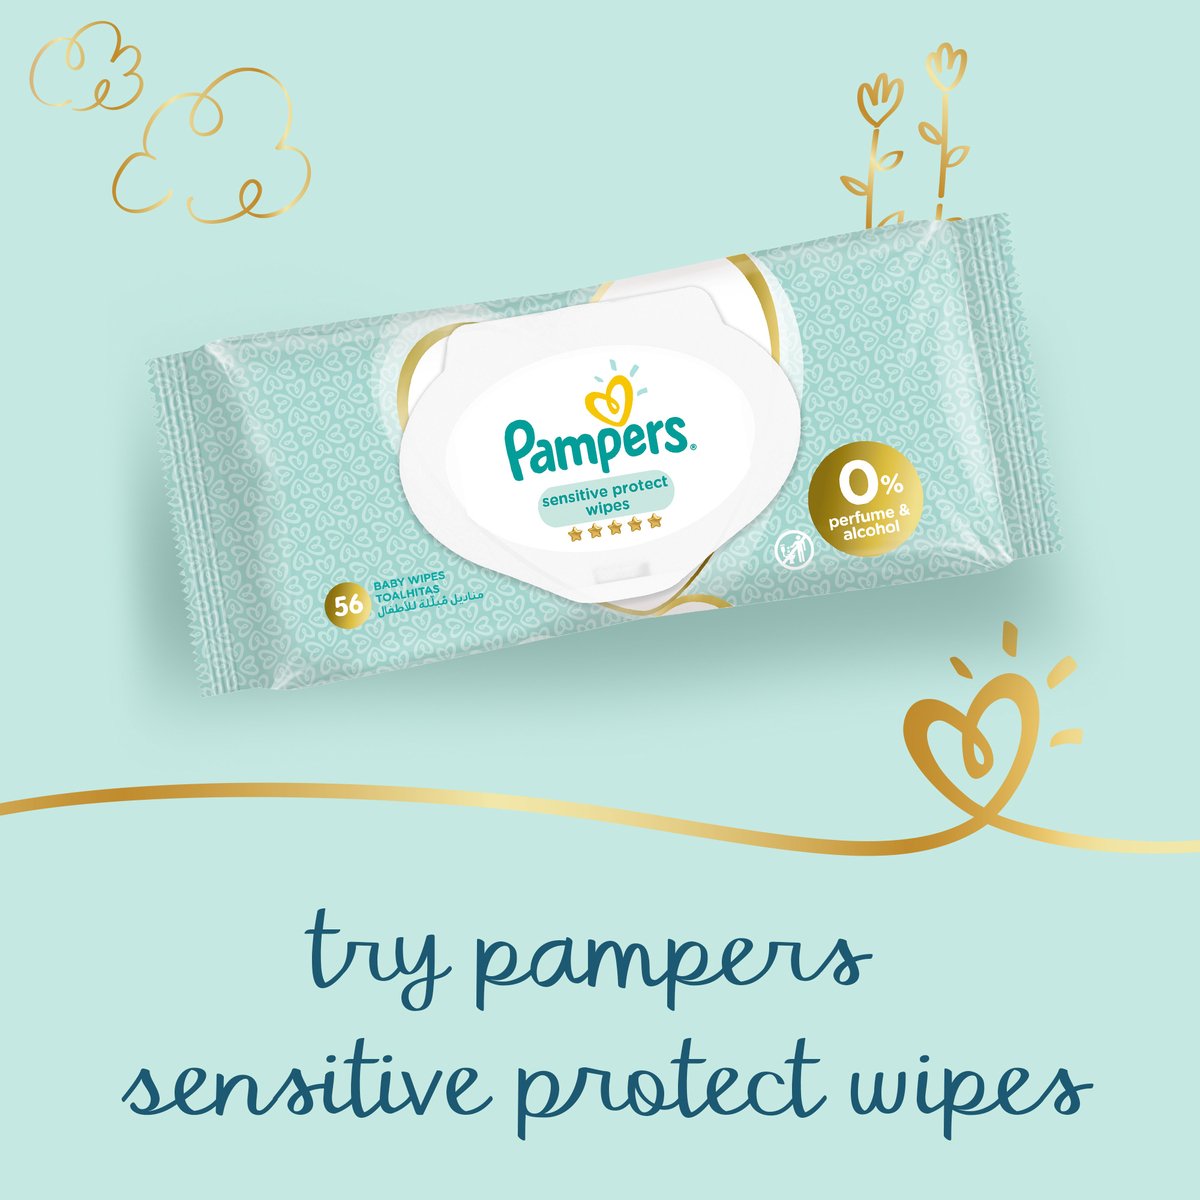 Pampers Premium Care Diapers Size 1, Newborn 2-5kg The Softest Diaper 86pcs